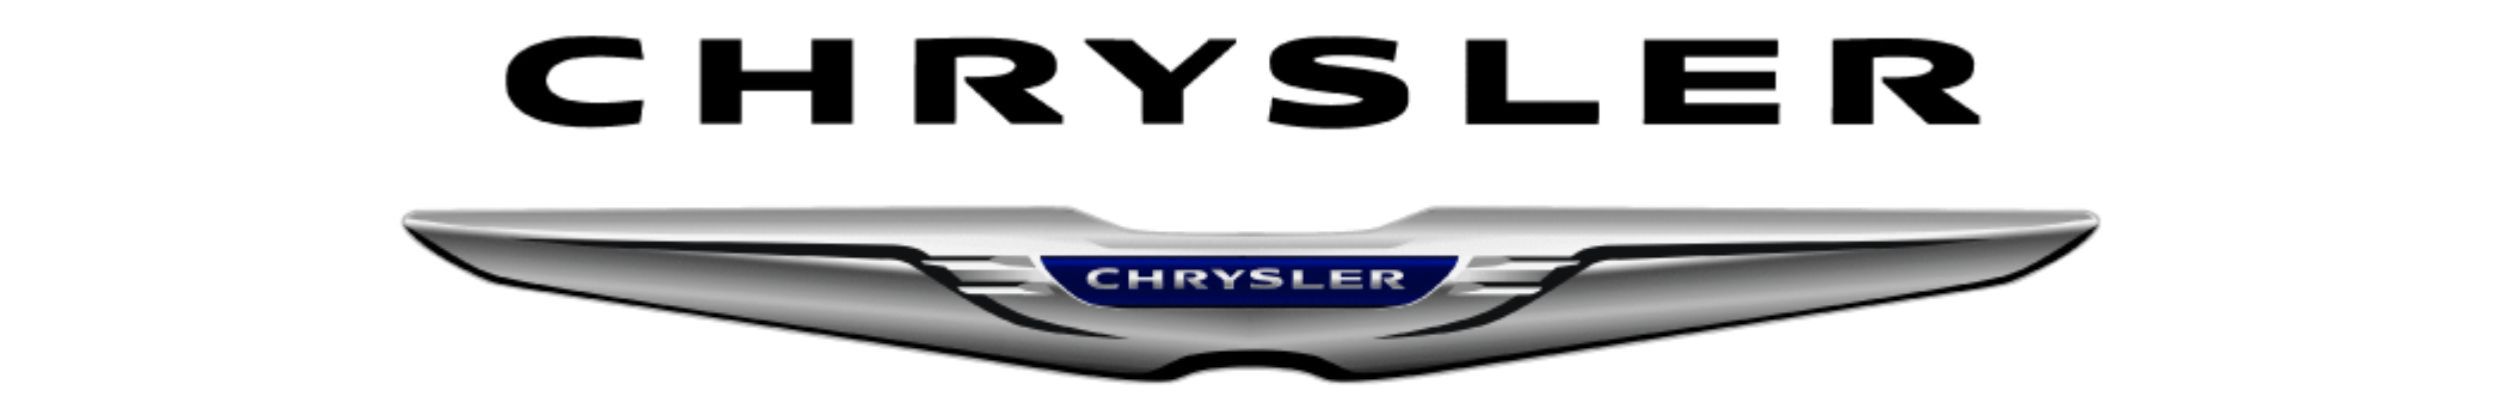 Research Chrysler Models in Elmira, NY